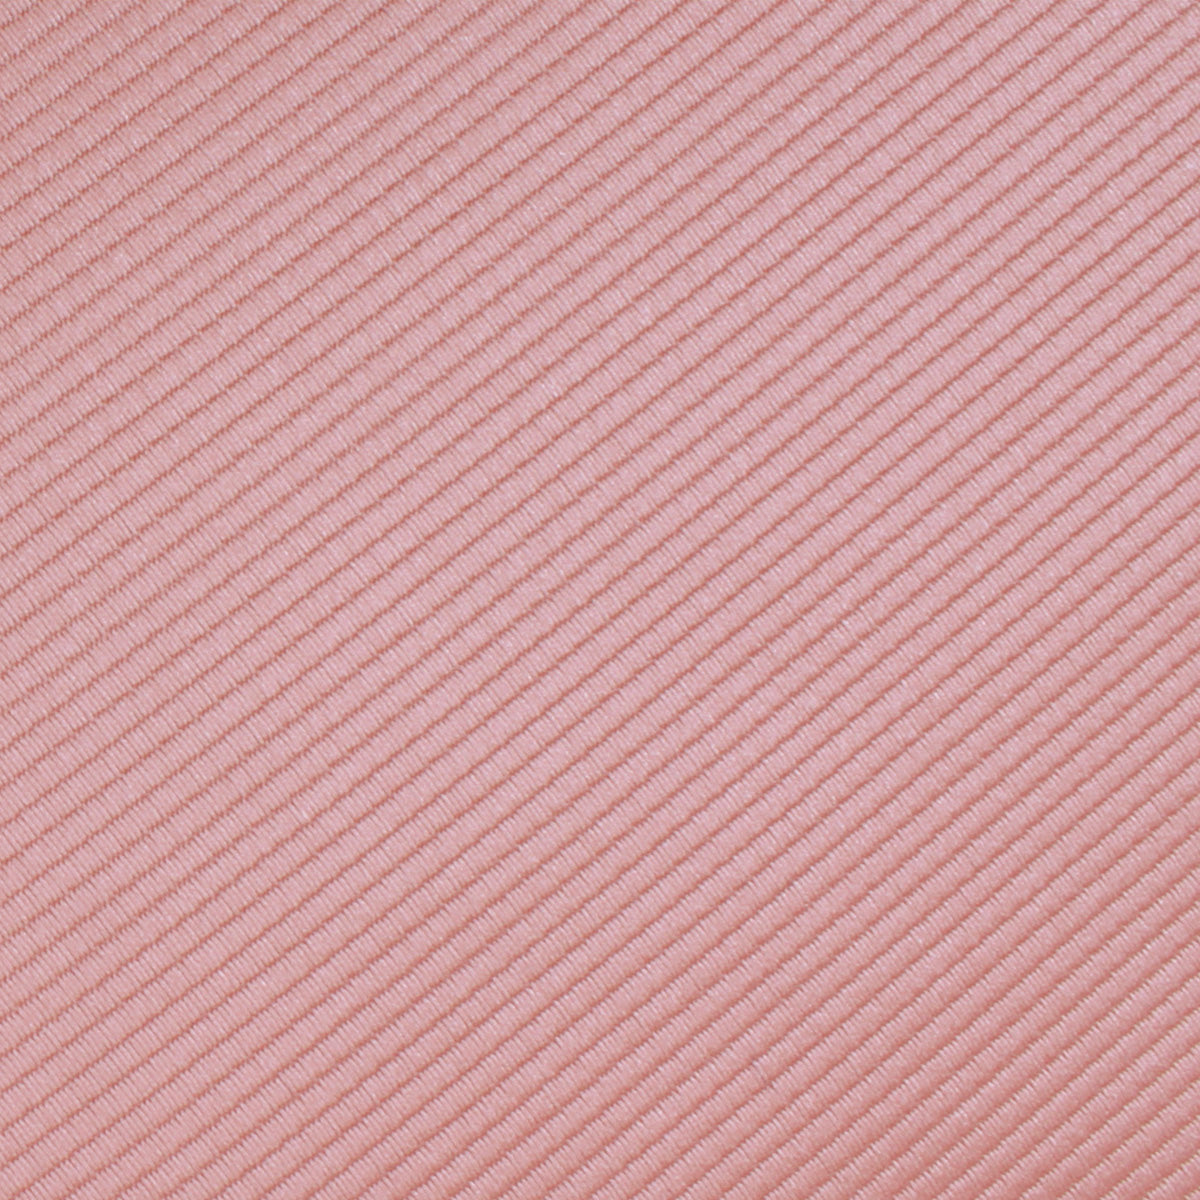 Dusty Blush Pink Twill Bow Tie Fabric